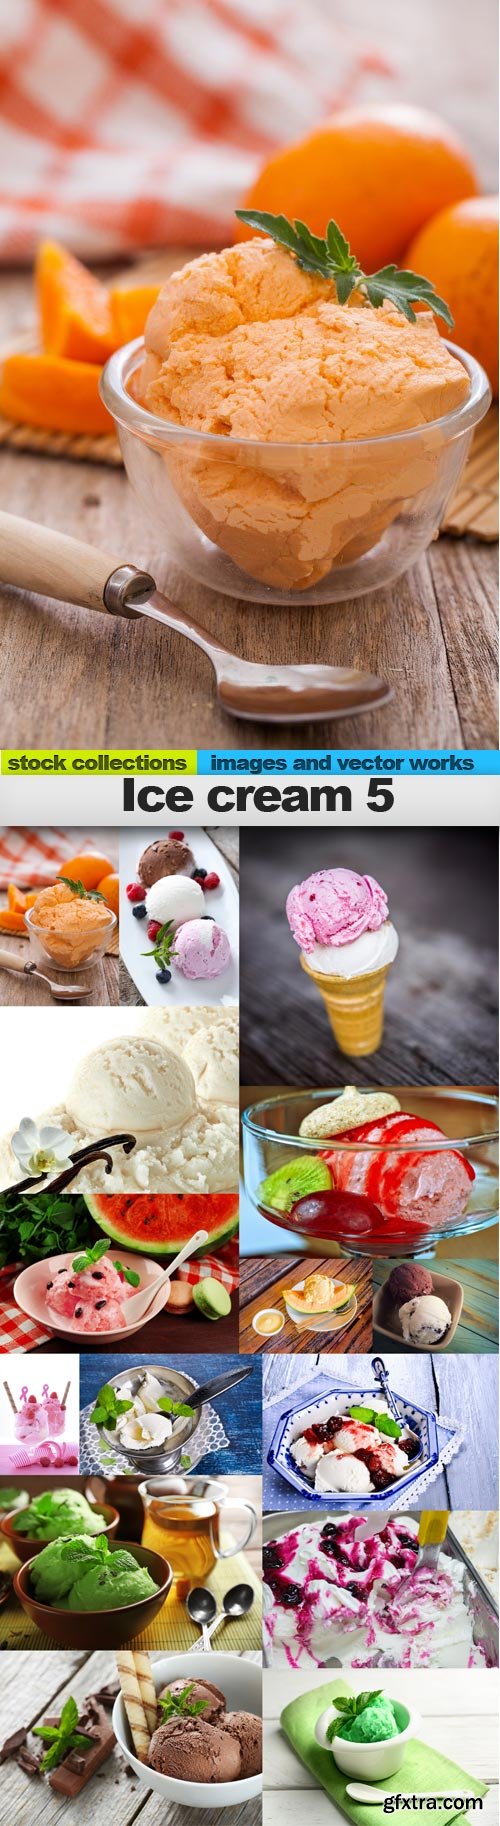 Ice cream 5, 15 x UHQ JPEG